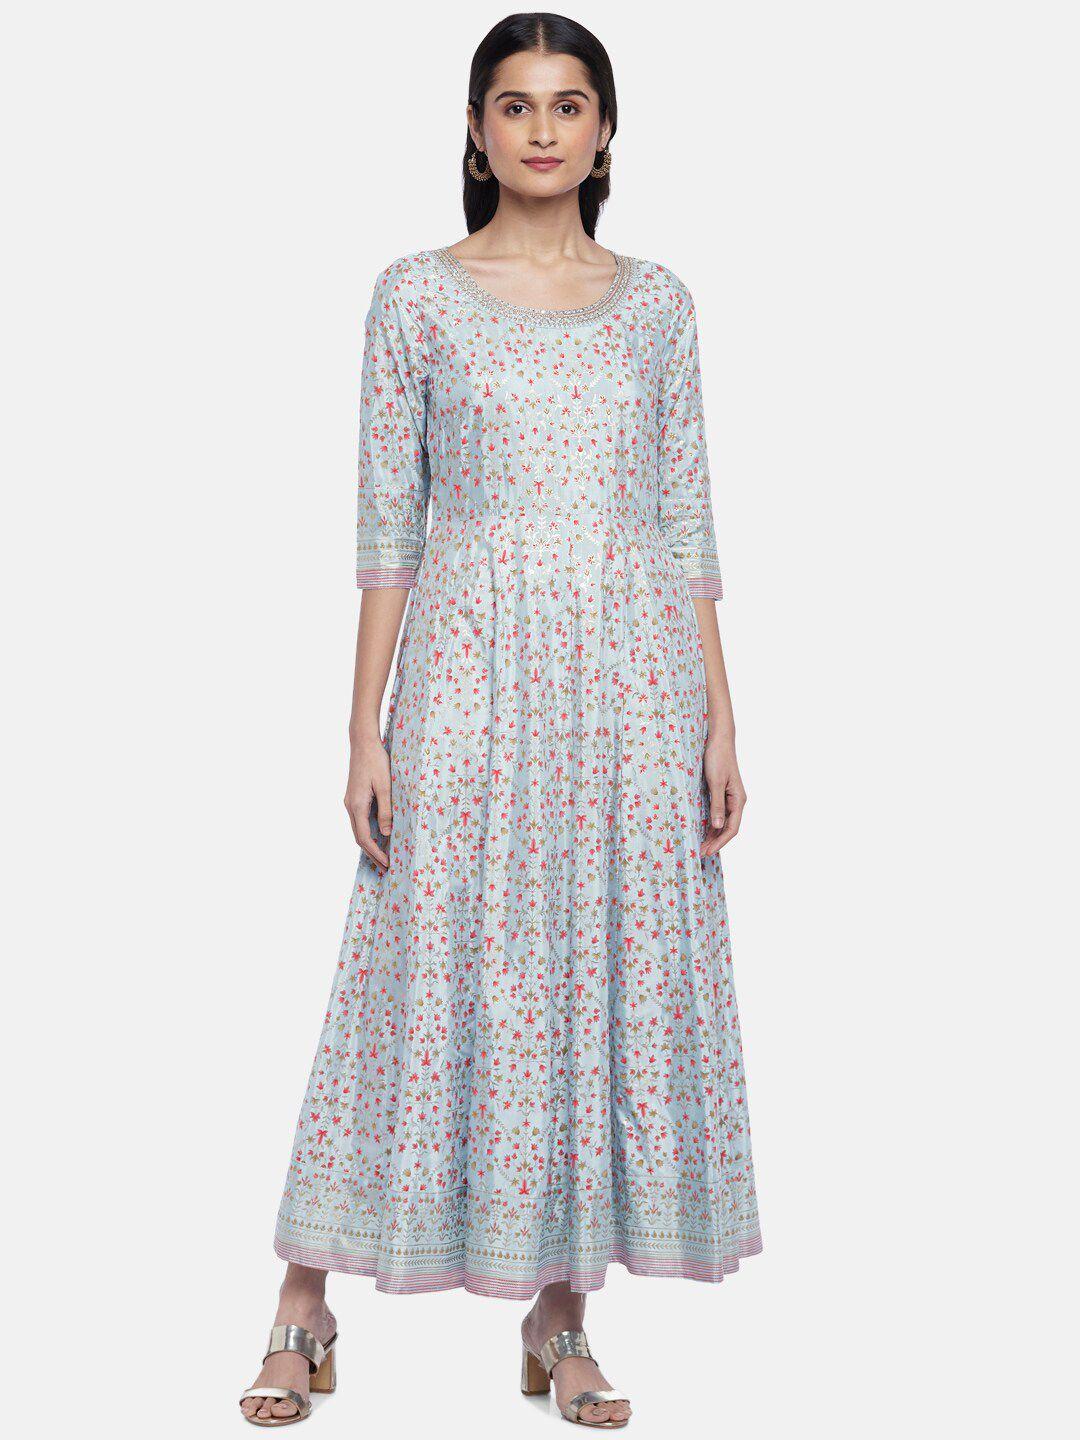 rangmanch-by-pantaloons-women-blue-floral-print-embellished-maxi-dress